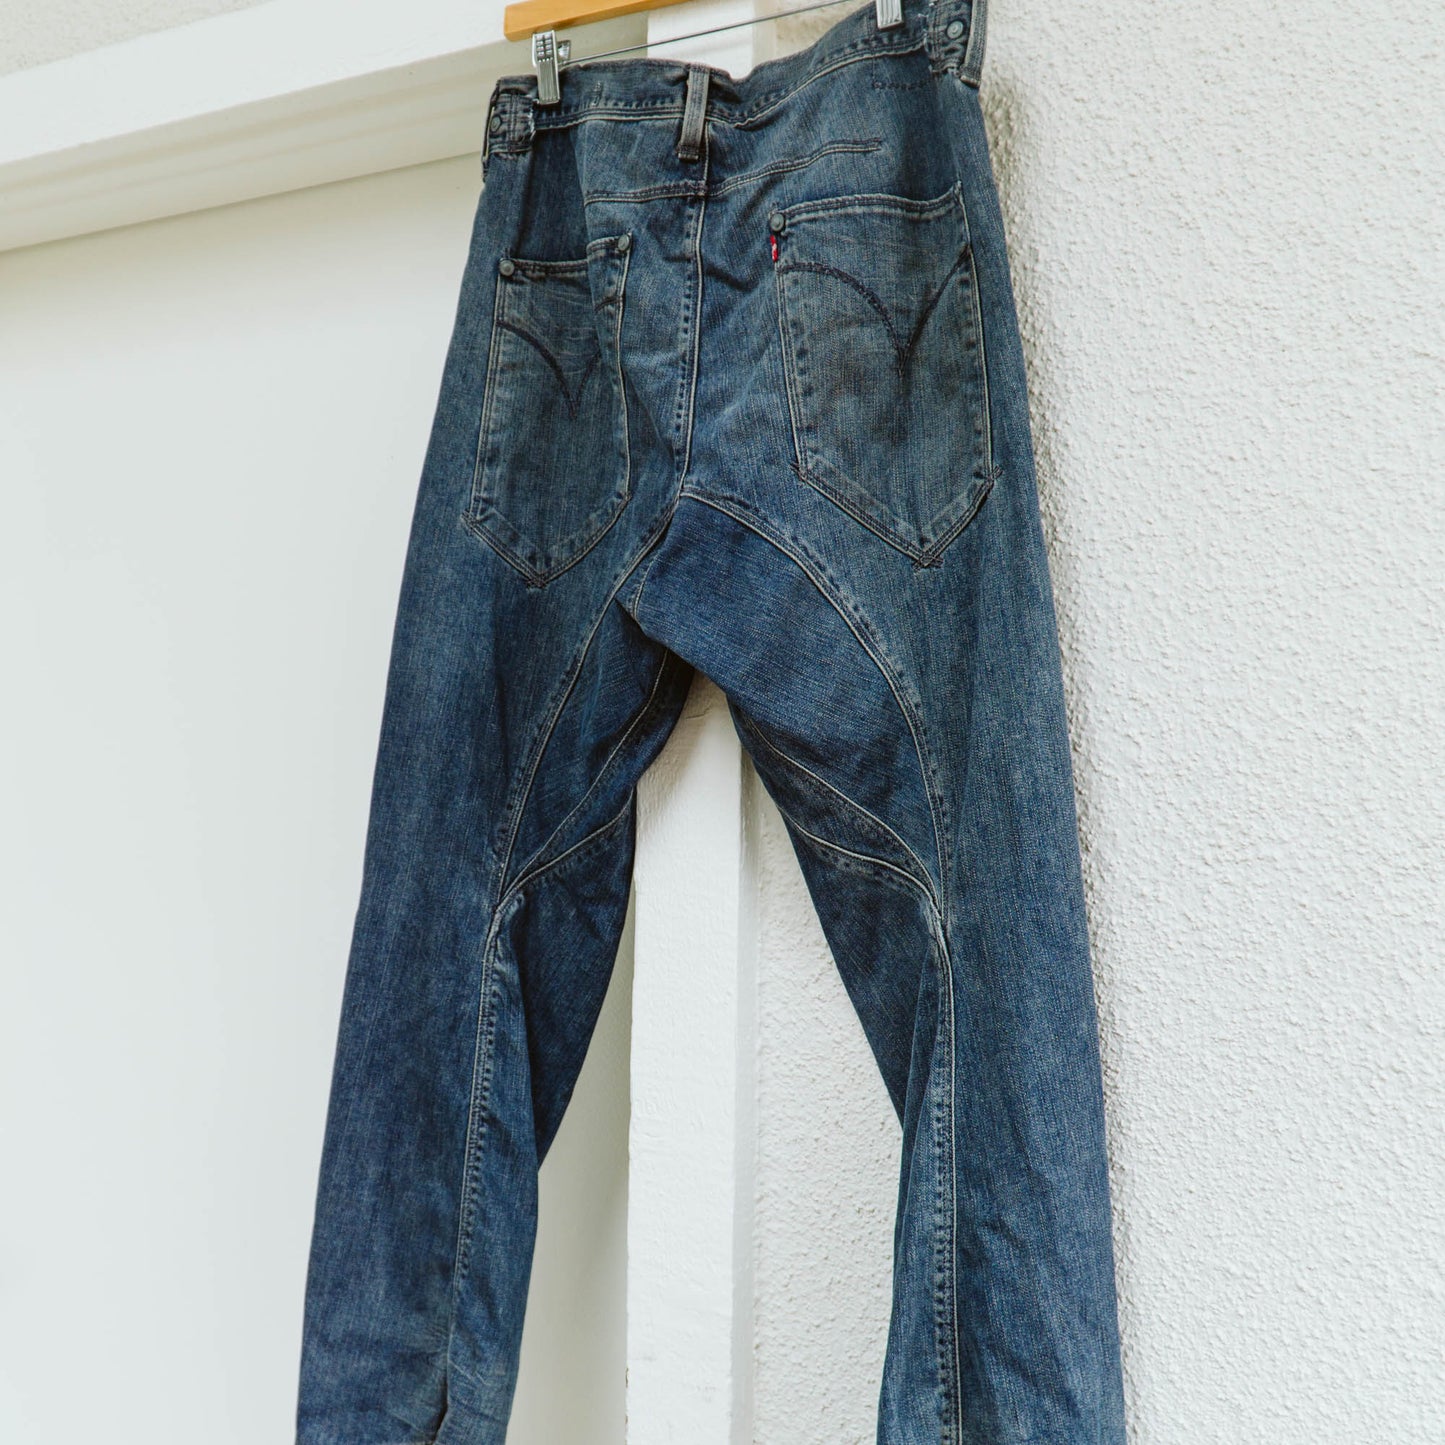 Men's Y2K Levi's Engineered Jeans W30